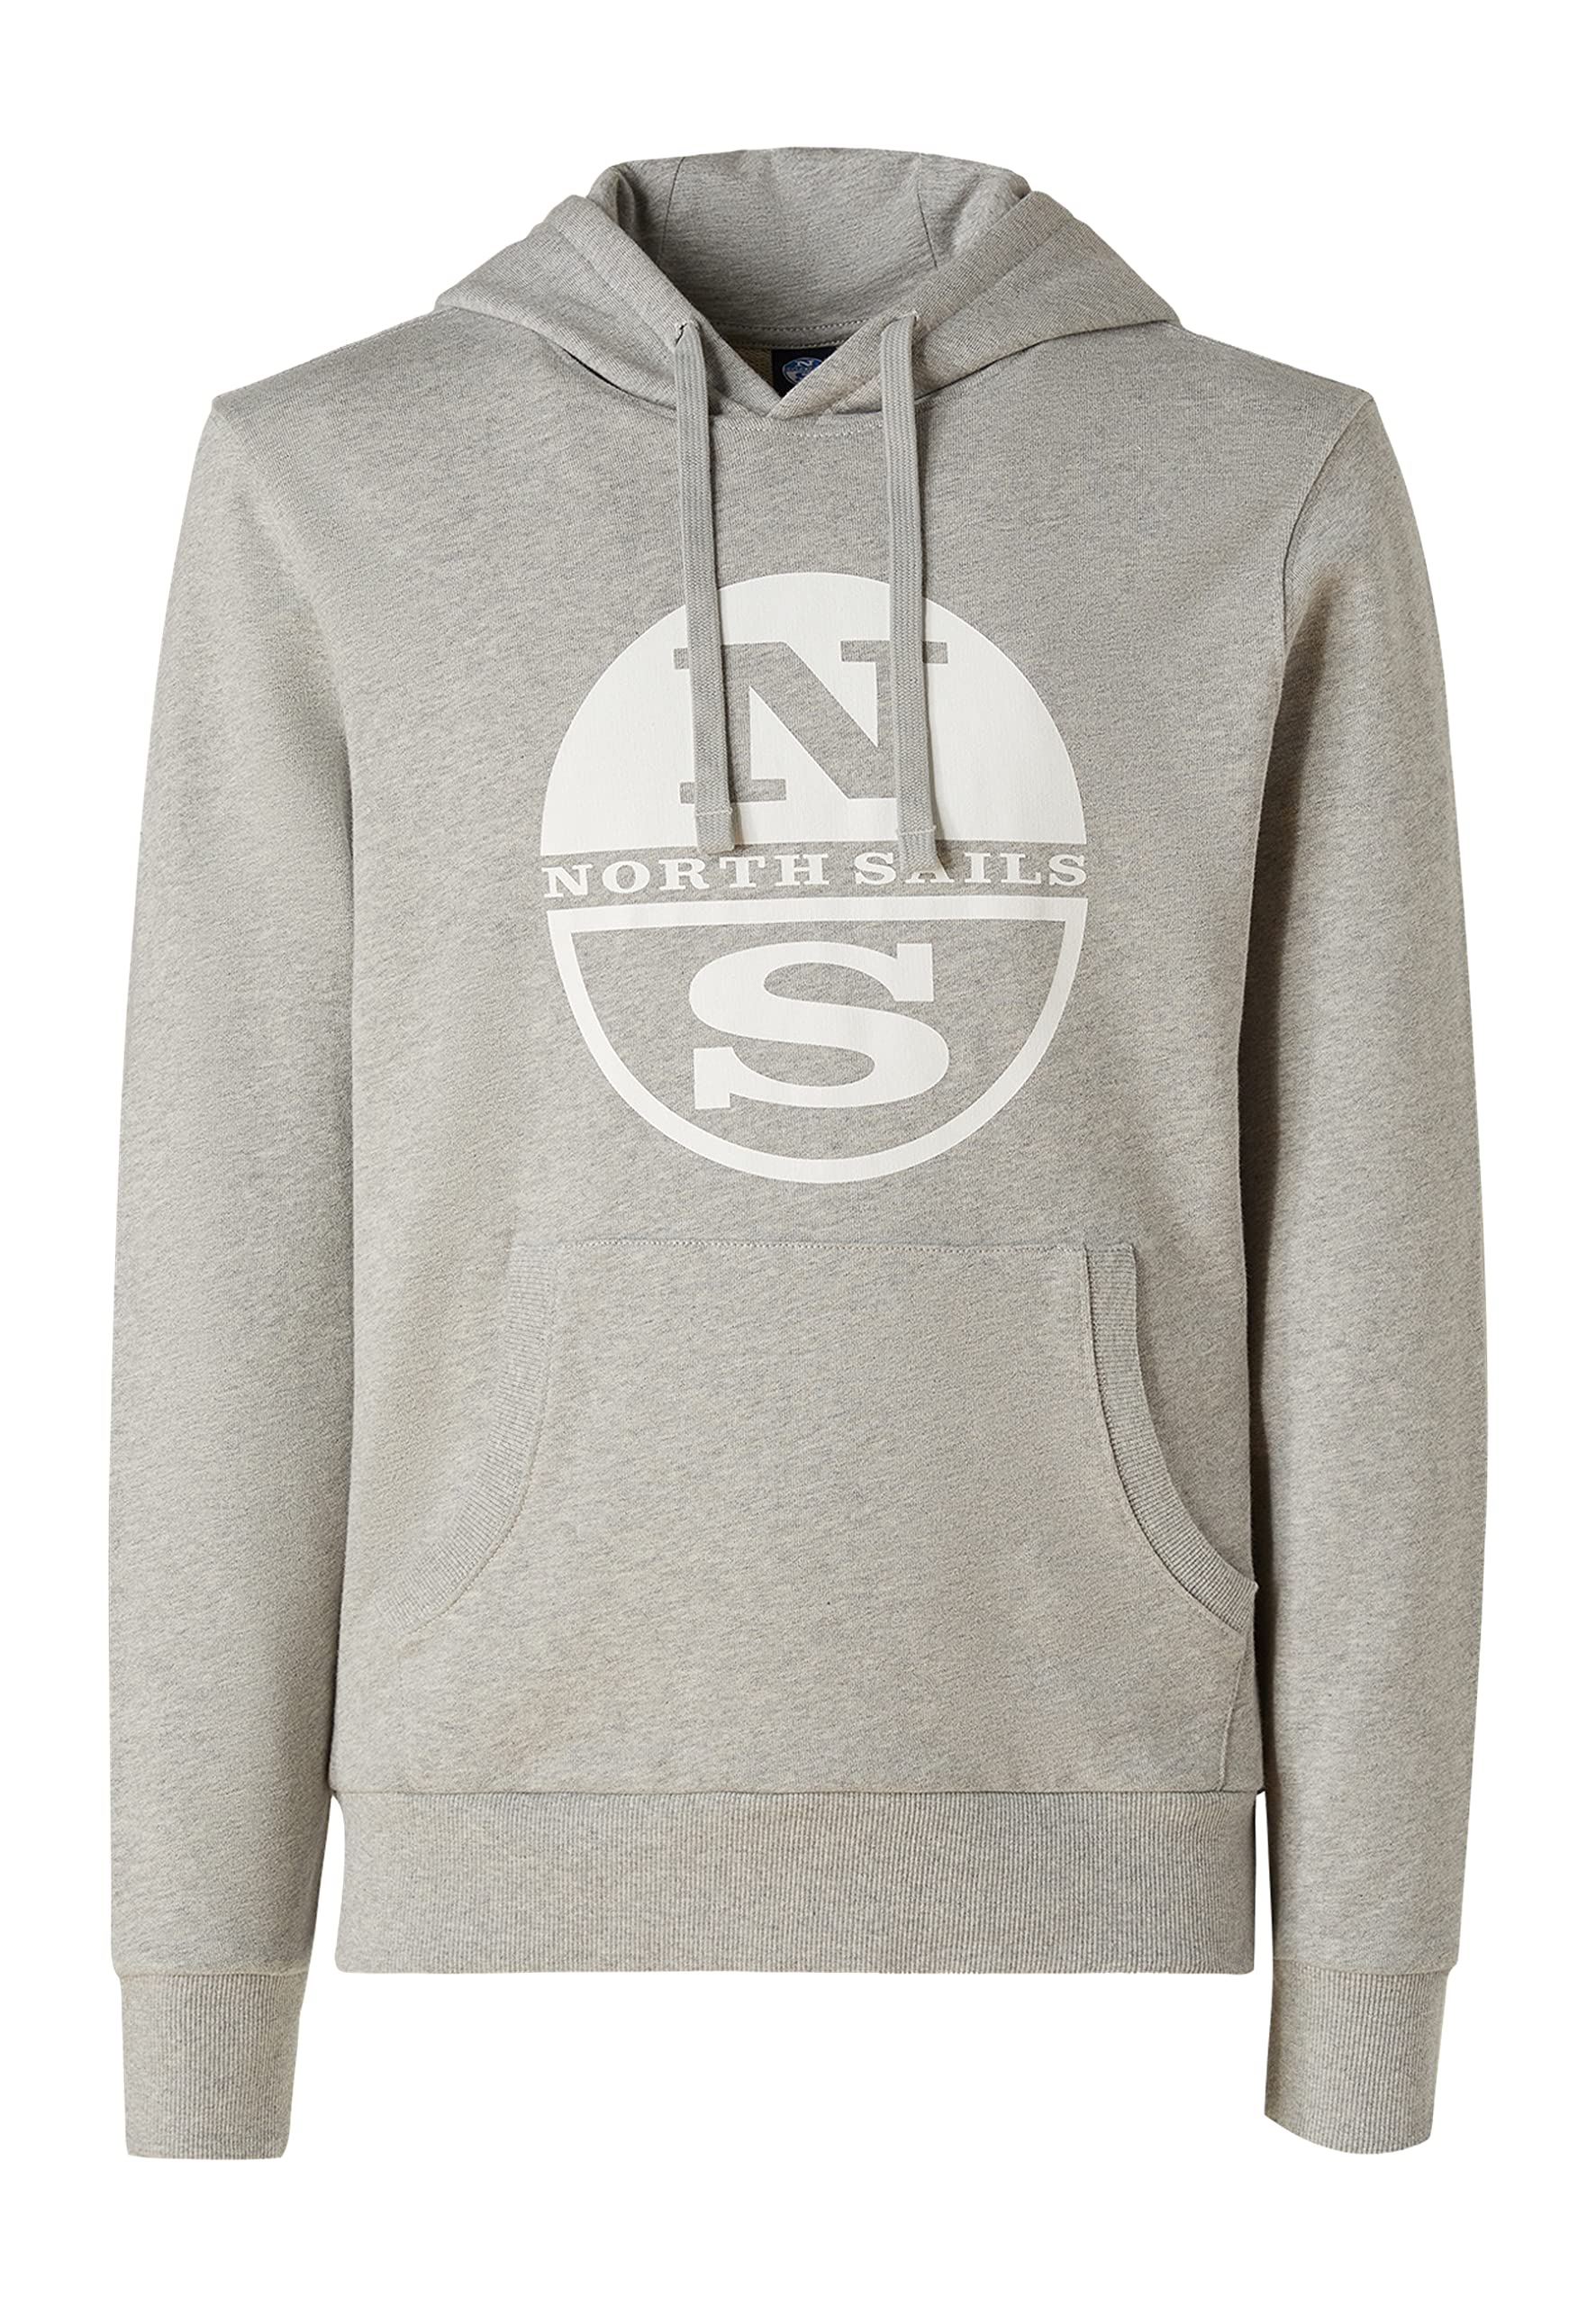 NORTH SAILS - Men's regular logo hoodie - Size L